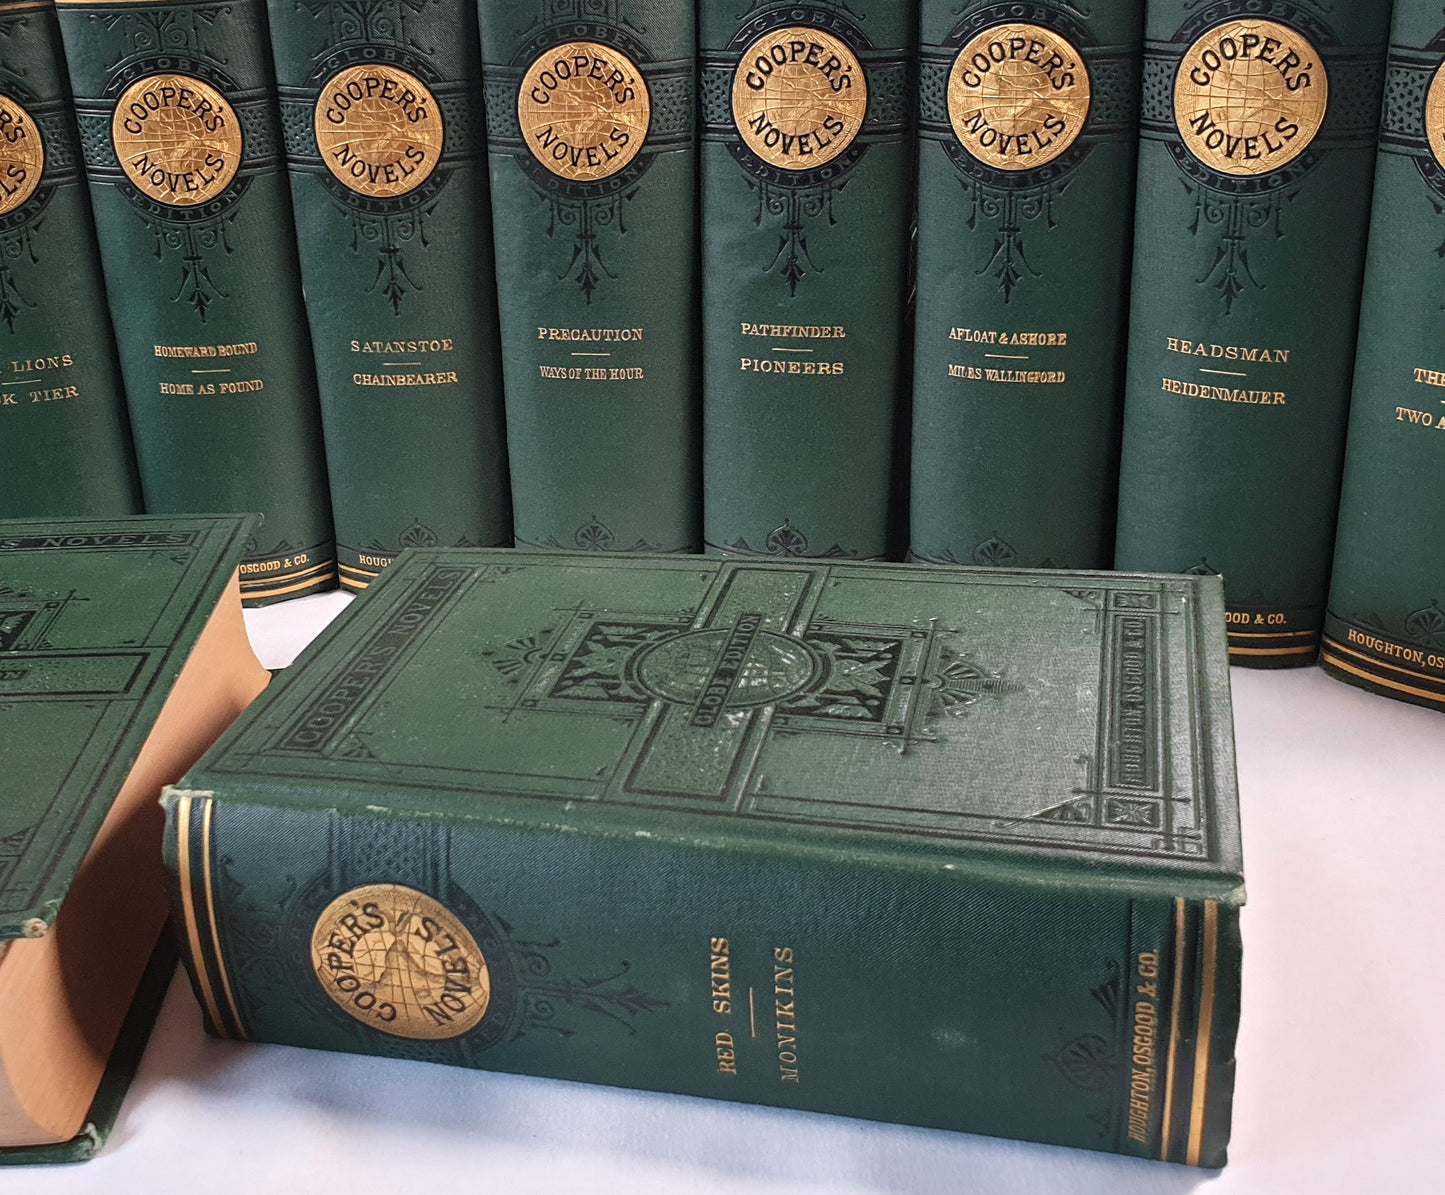 Cooper, J. F. - The Works of J. Fenimore Cooper Globe Edition (32 Novels in 16 books)